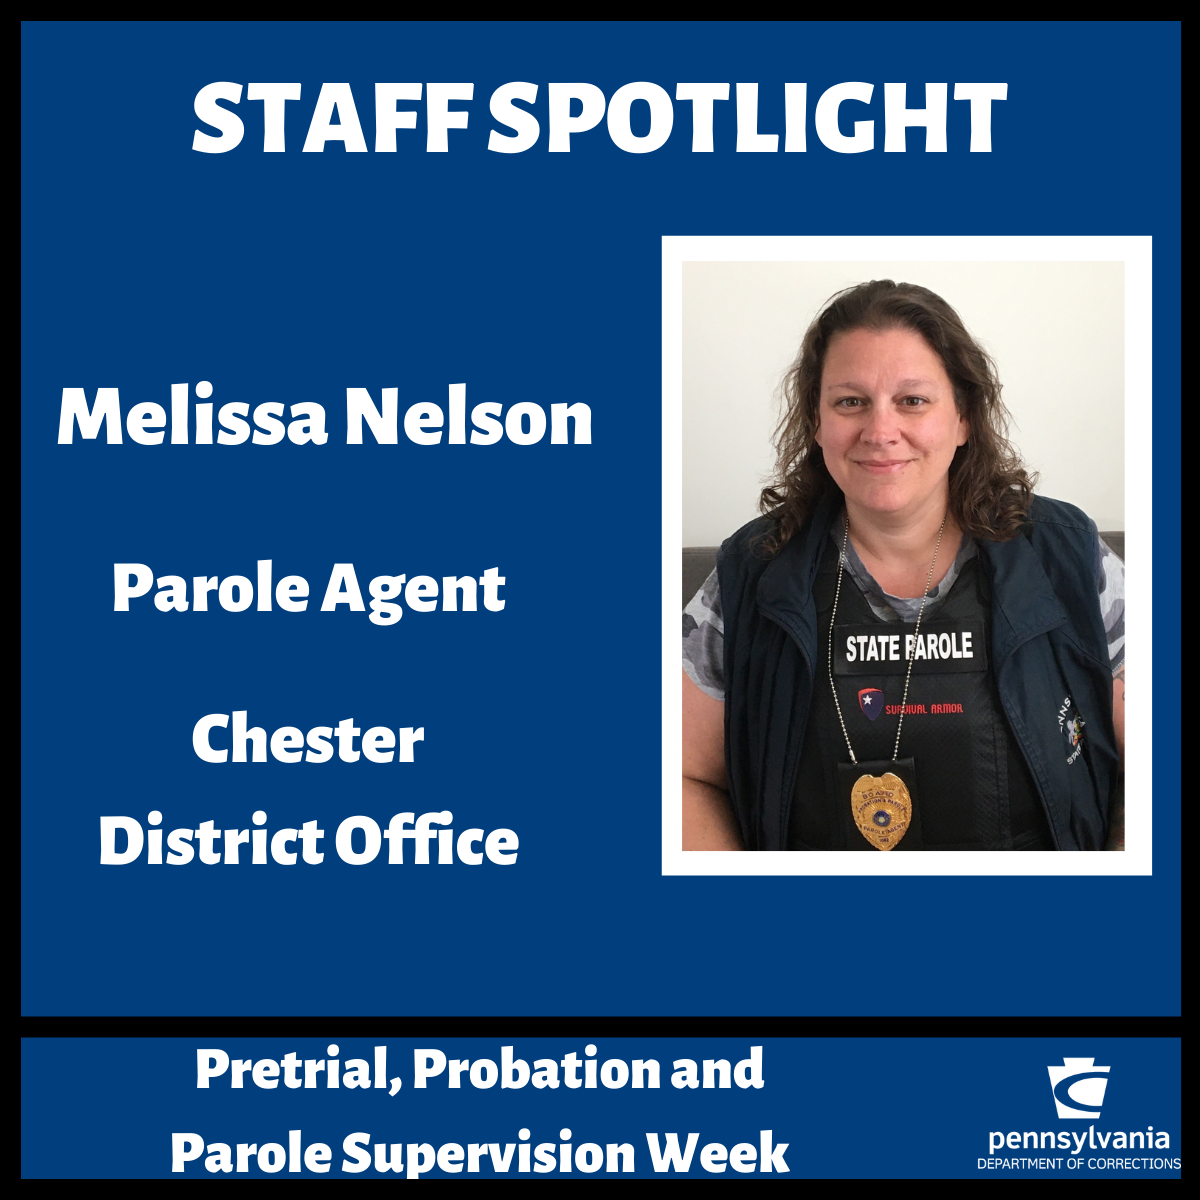 A graphic honoring Parole Agent Melissa Nelson